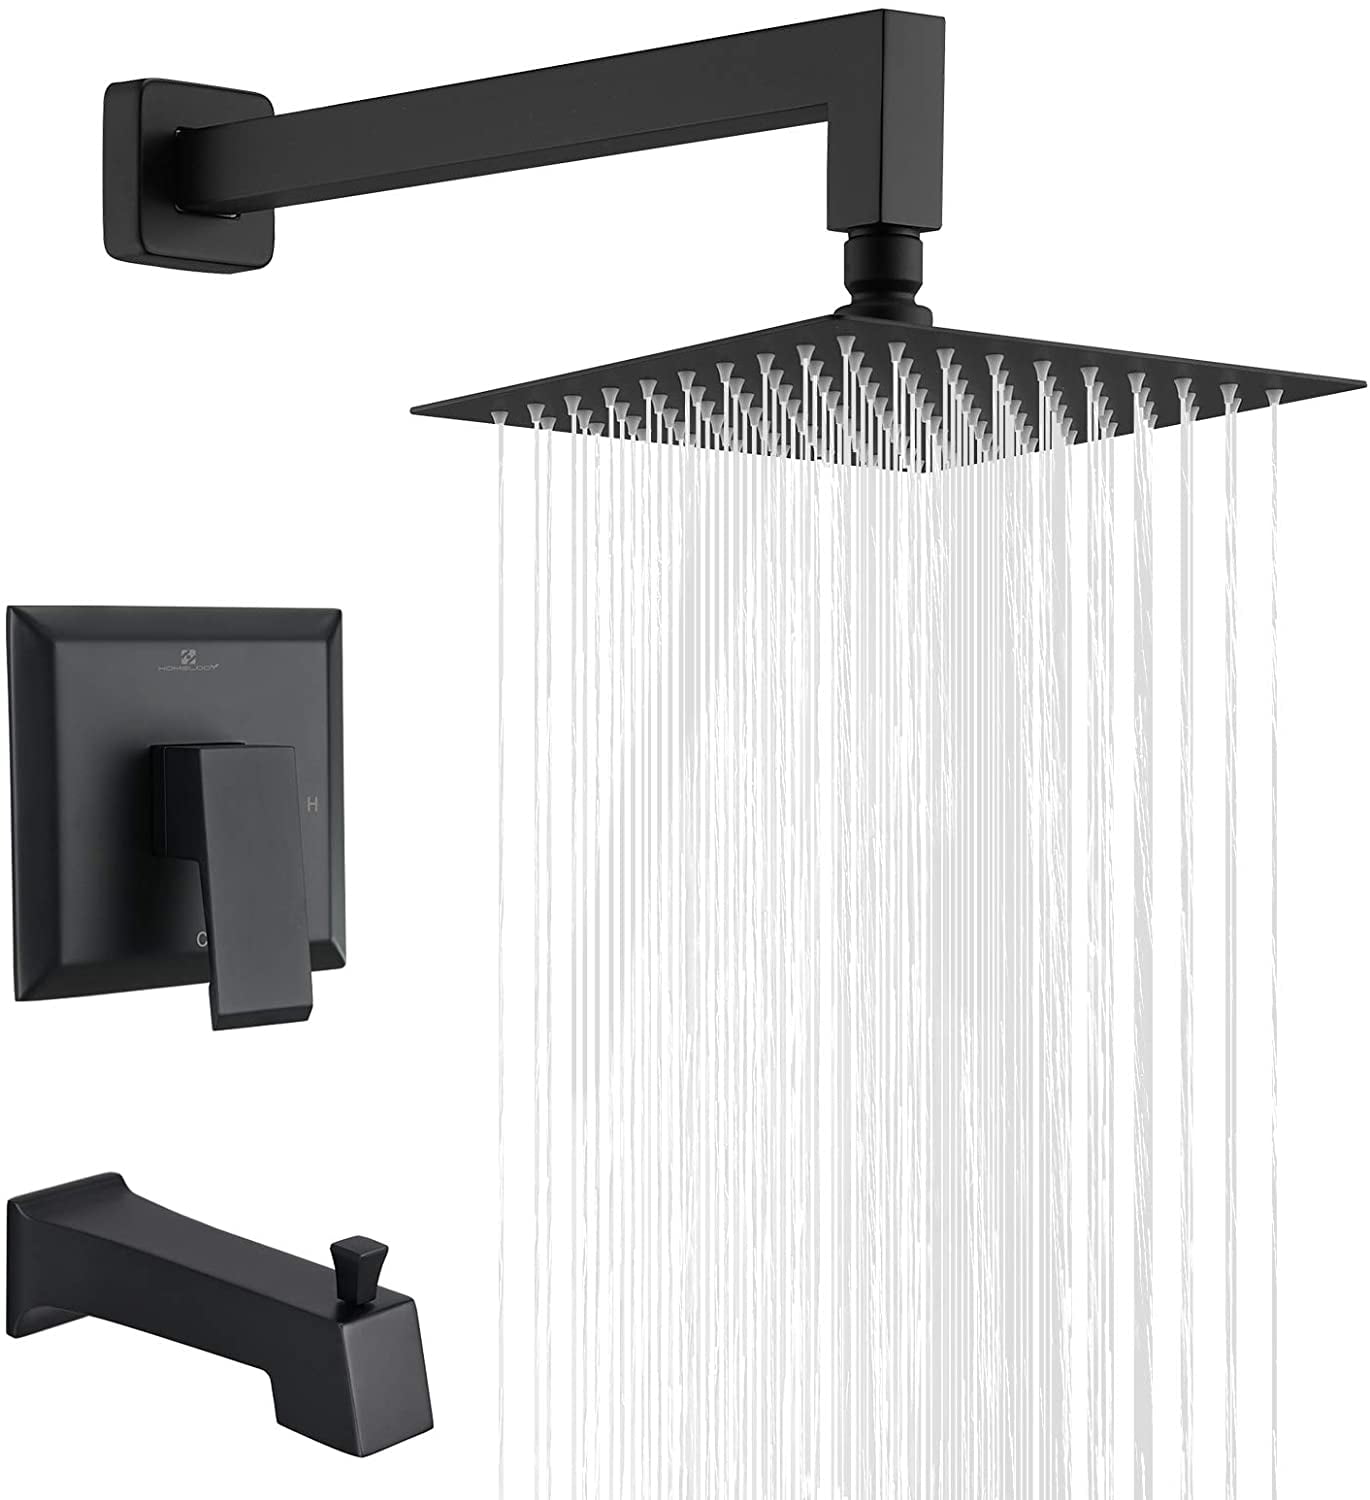 Homelody Matte Black Shower Faucet Set, Add Shower Hose To Bathtub